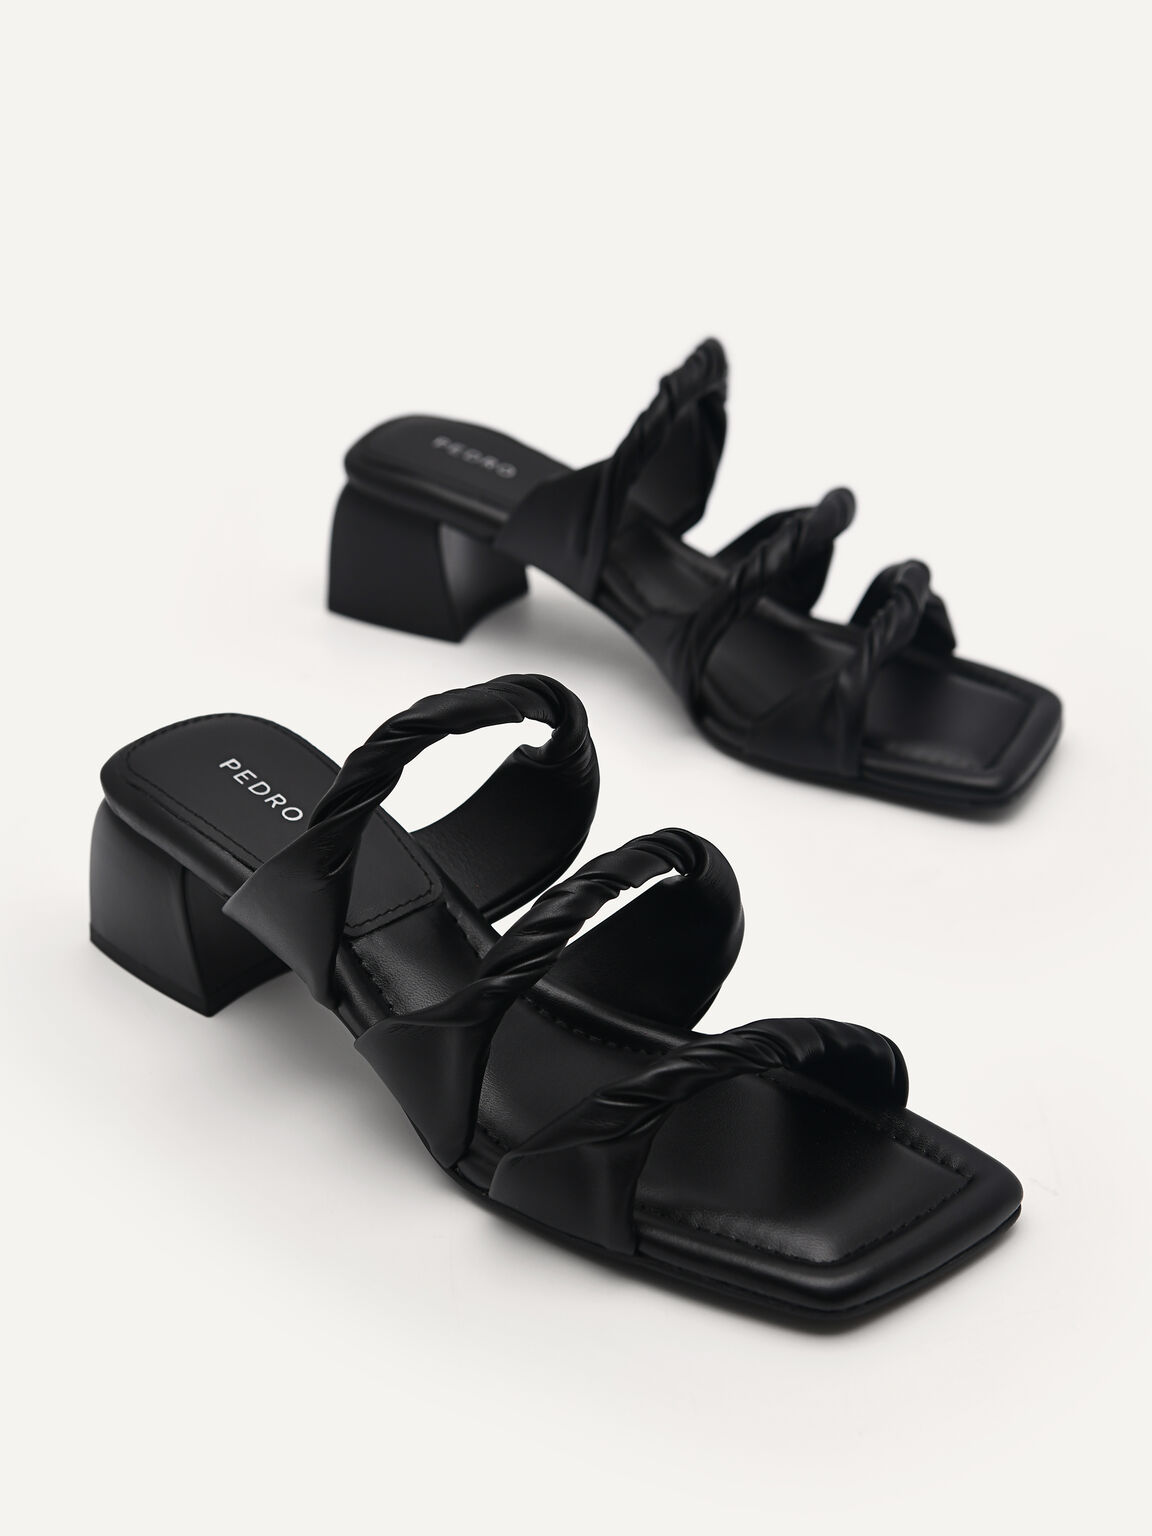 Arch Heeled Sandals, Black